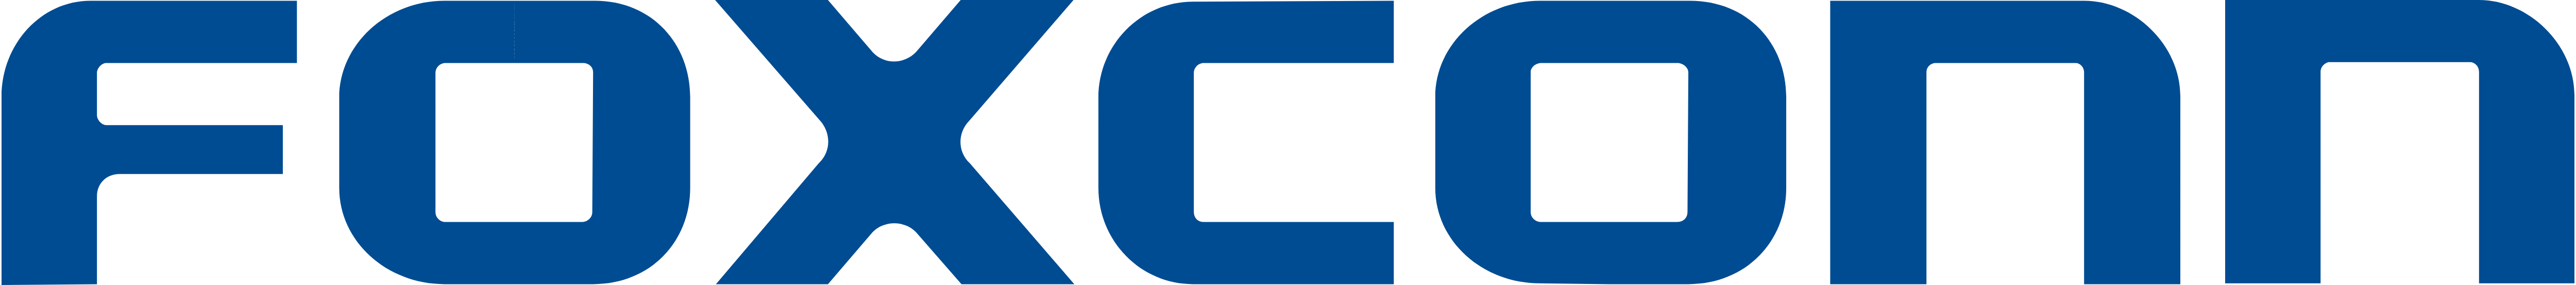 Foxconn_logo_blue